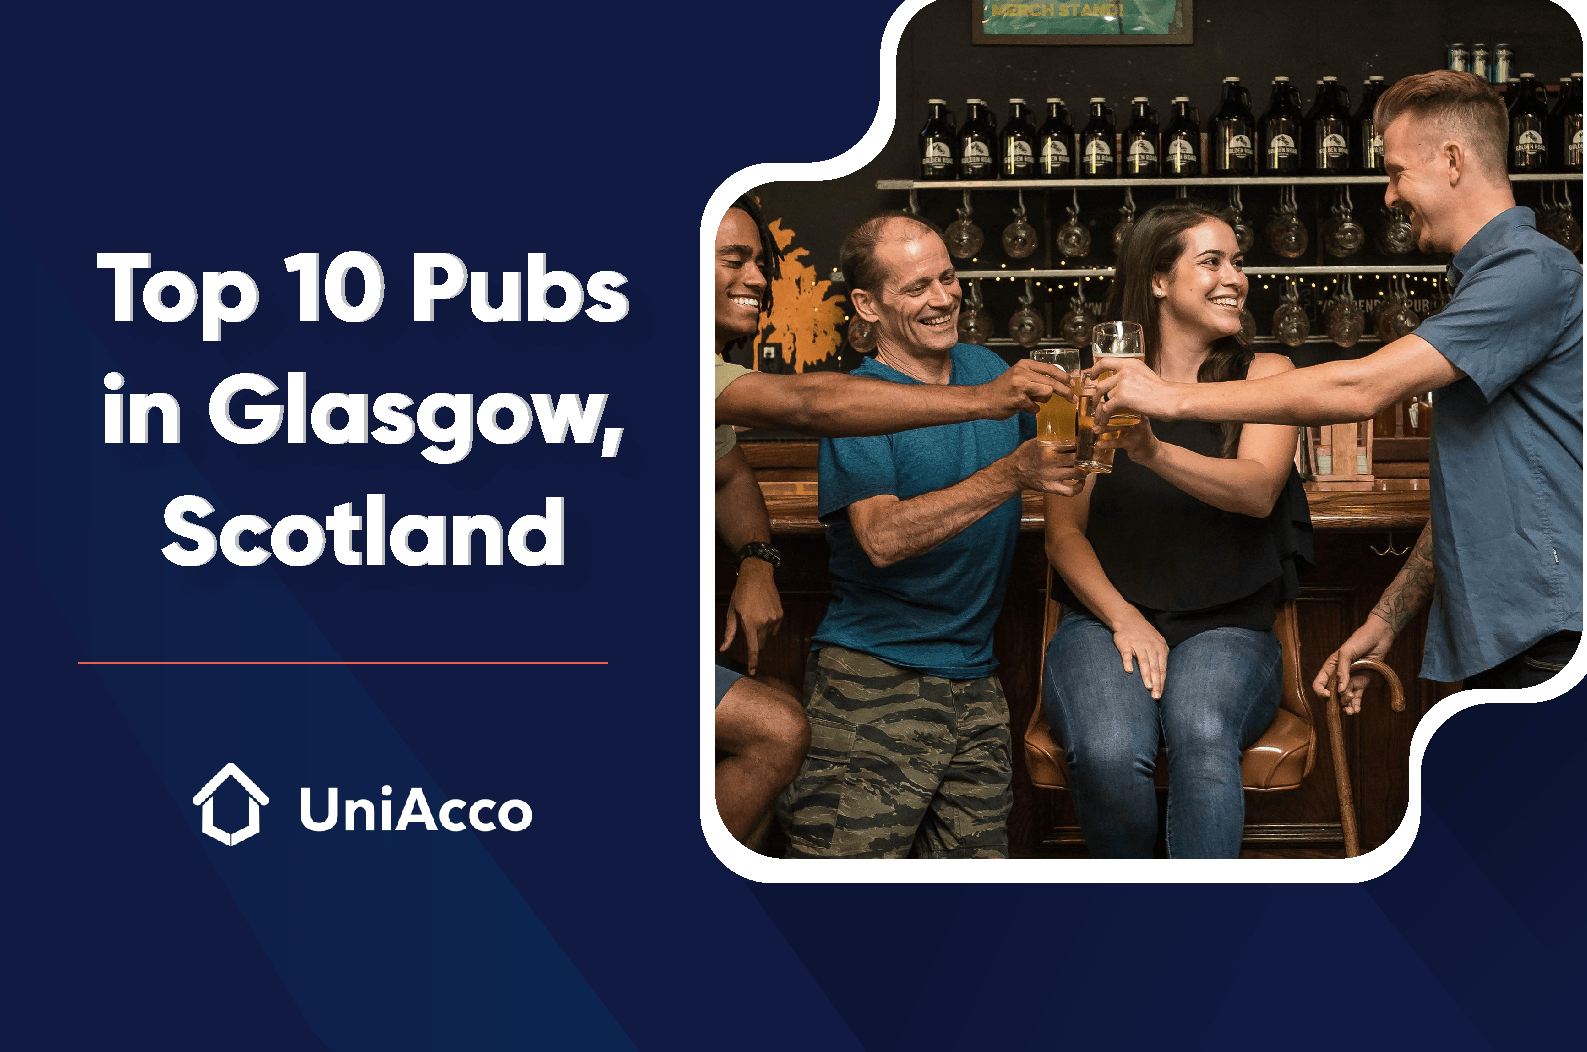 Top 10 Pubs in Glasgow, Scotland